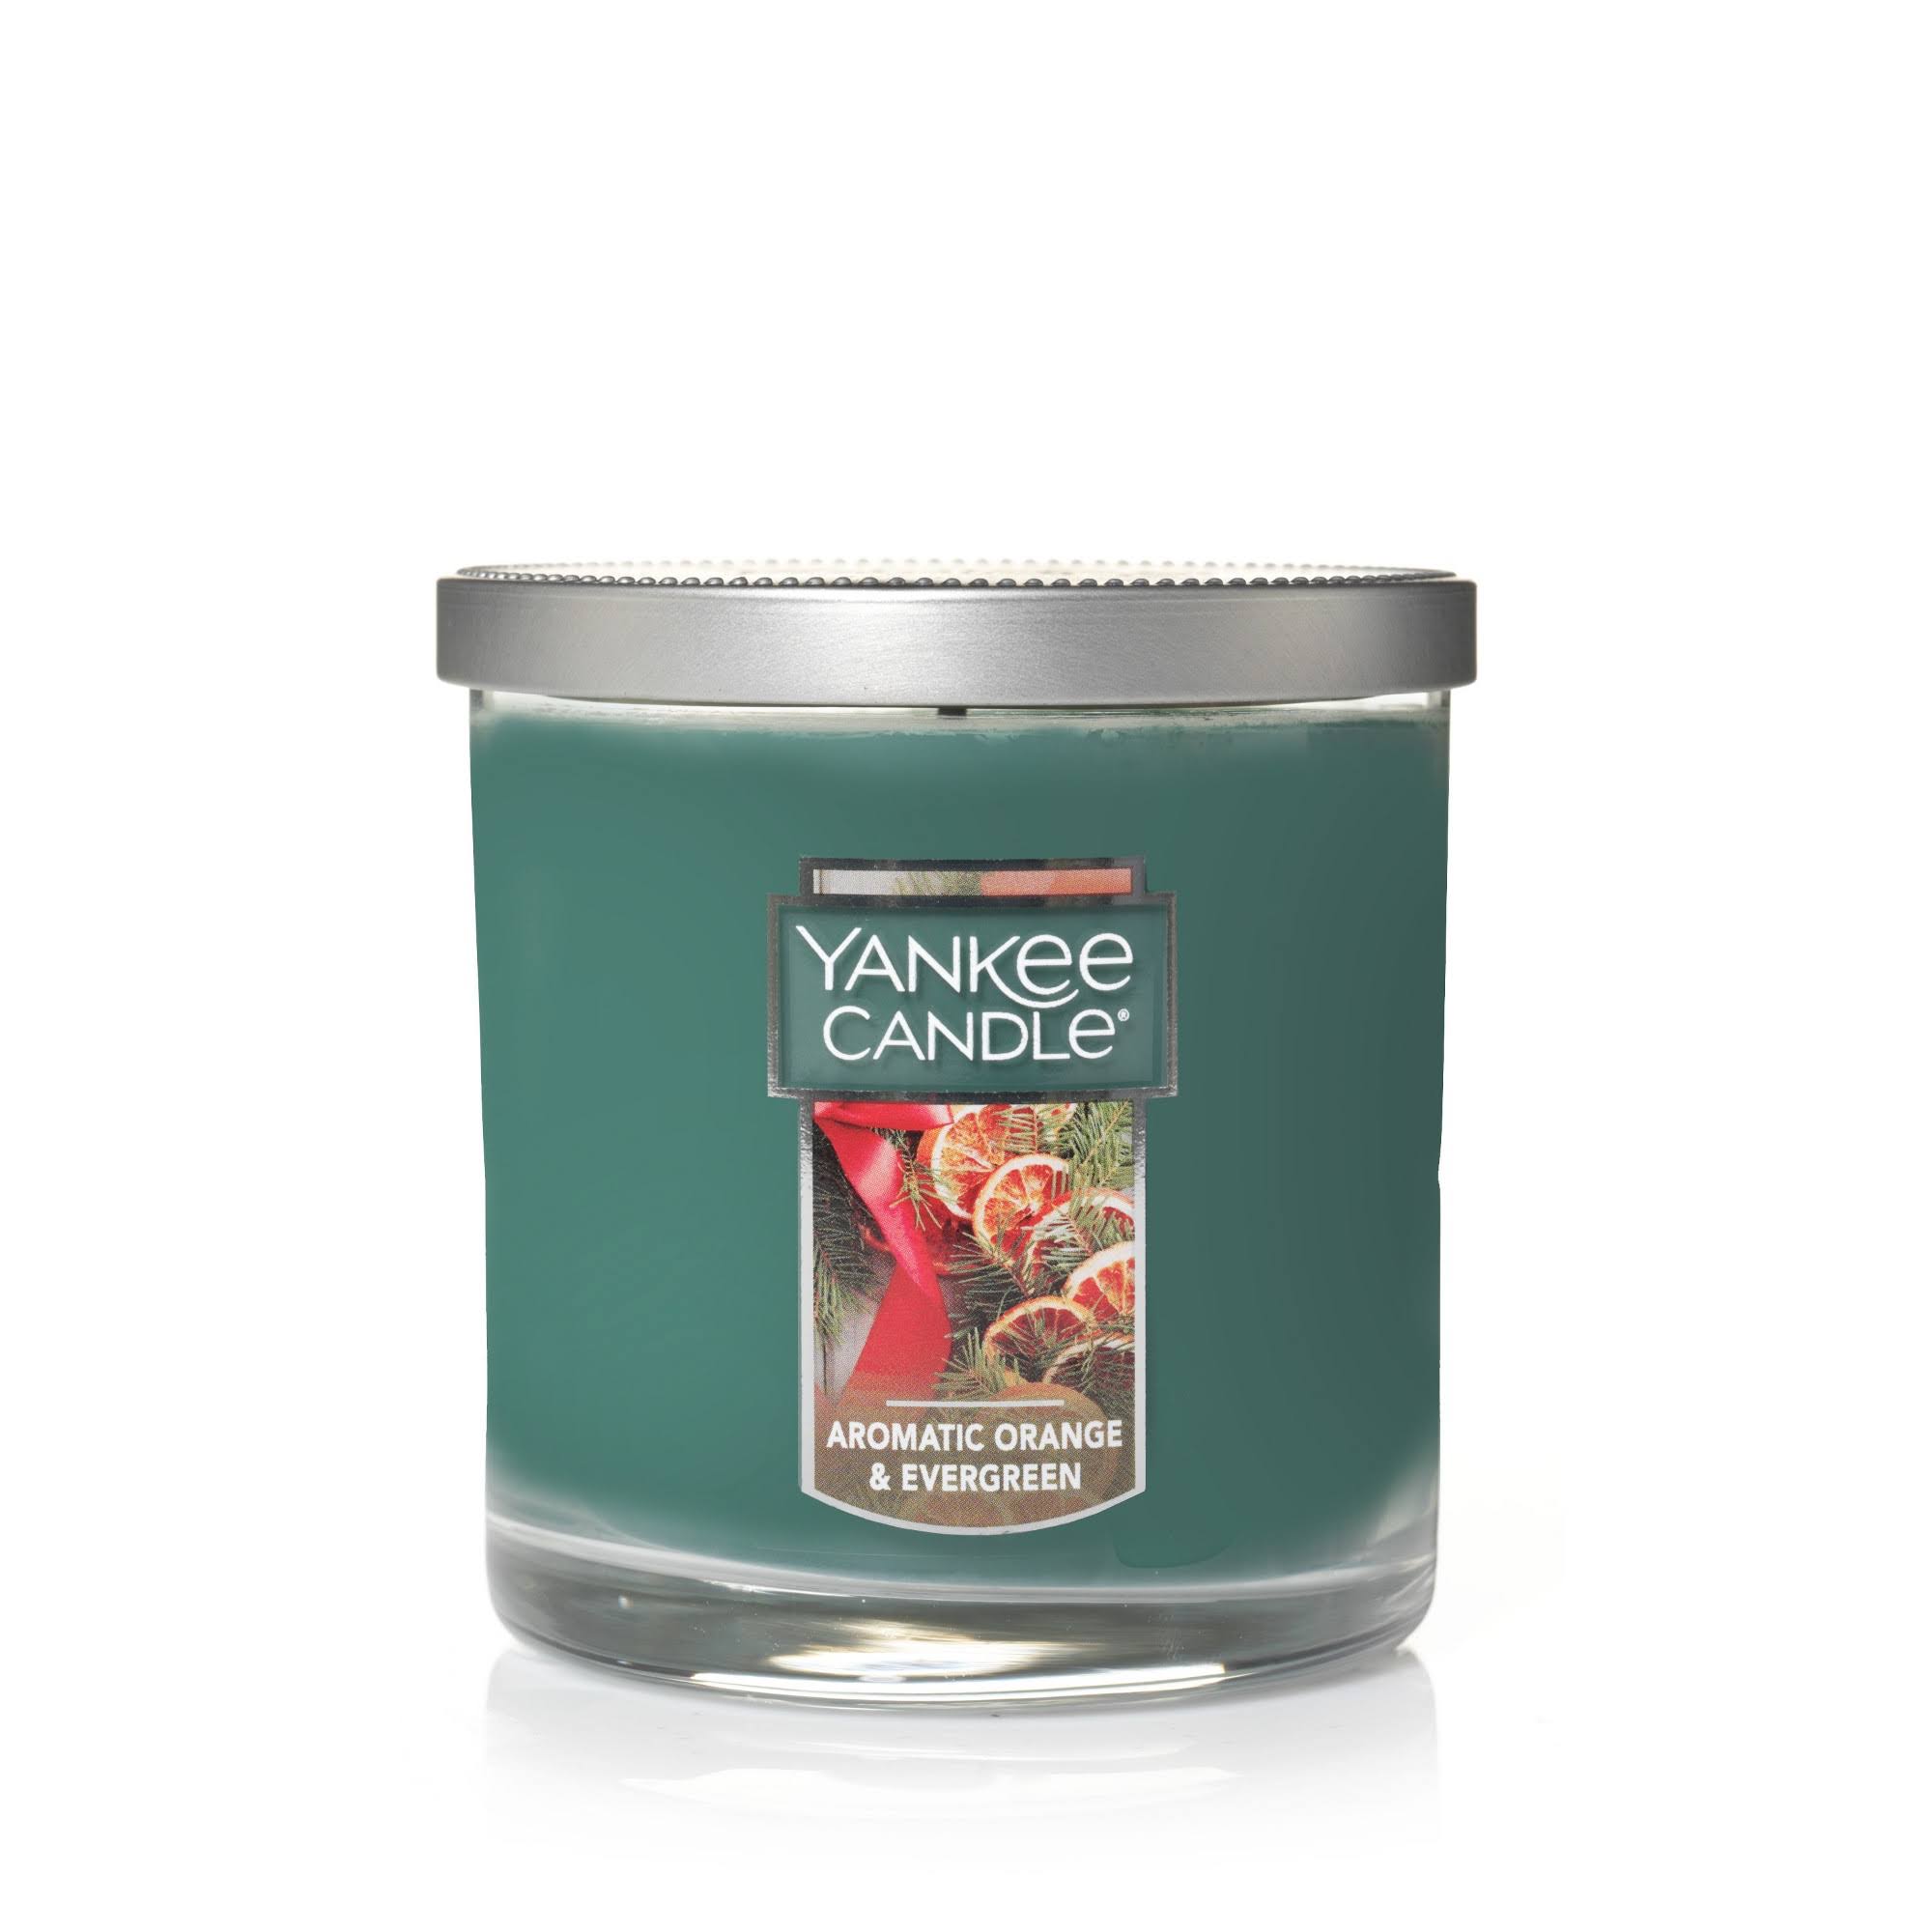 Yankee Candle Aromatic Orange & Evergreen Regular Tumbler Candle